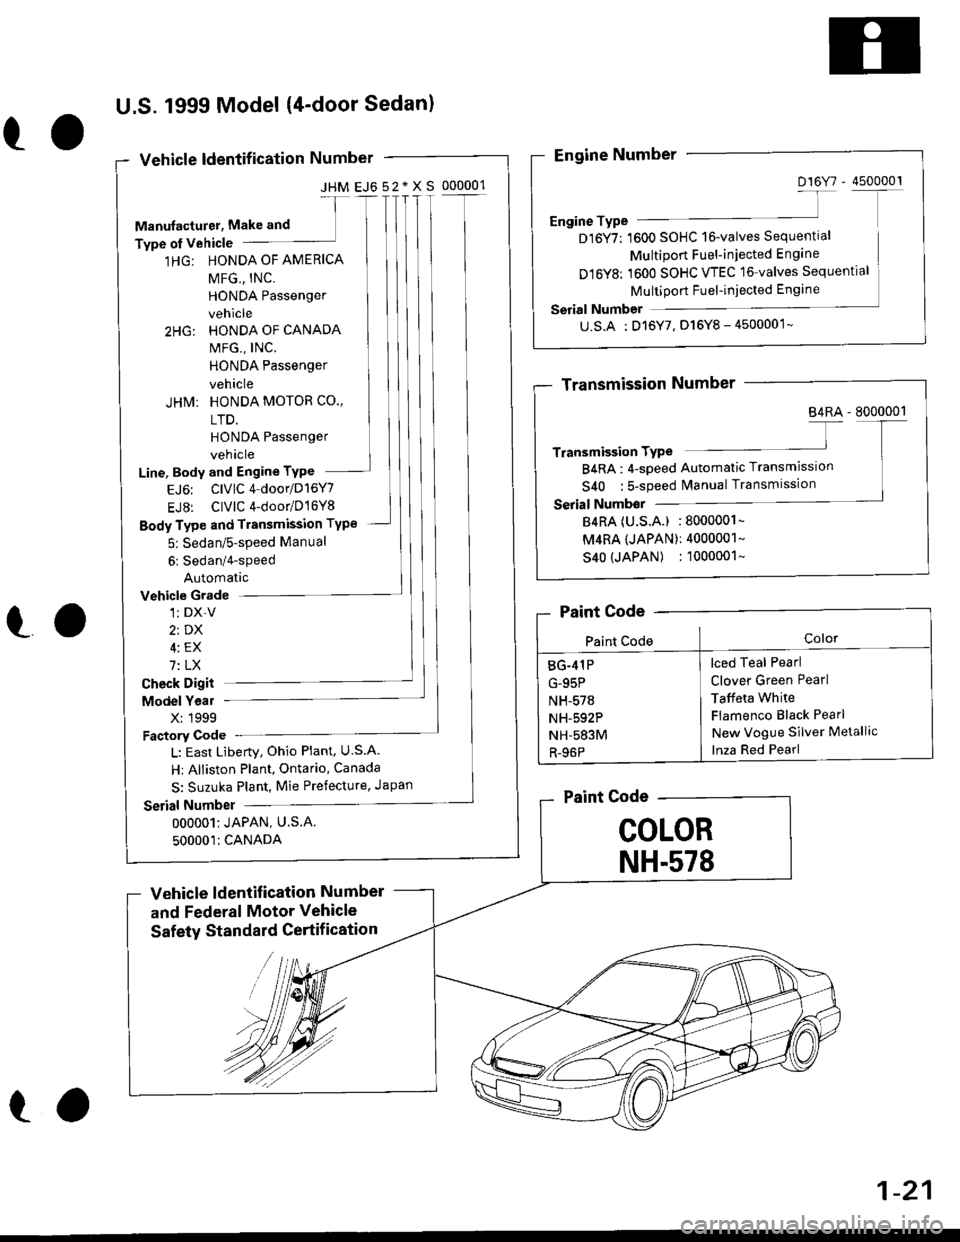 HONDA CIVIC 1996 6.G Owners Manual ro
U.S. 1999 Model (4door Sedan)
Vehicle ldentif ication Number
JHM EJ652*XS 000001-f
Manufacturel, Make and
Type ol vehicle
1HG: HONDA OF AMERICA
Vehicle Gradel: DX-V
2t DX
4: EX
7: LX
HONDA Passen